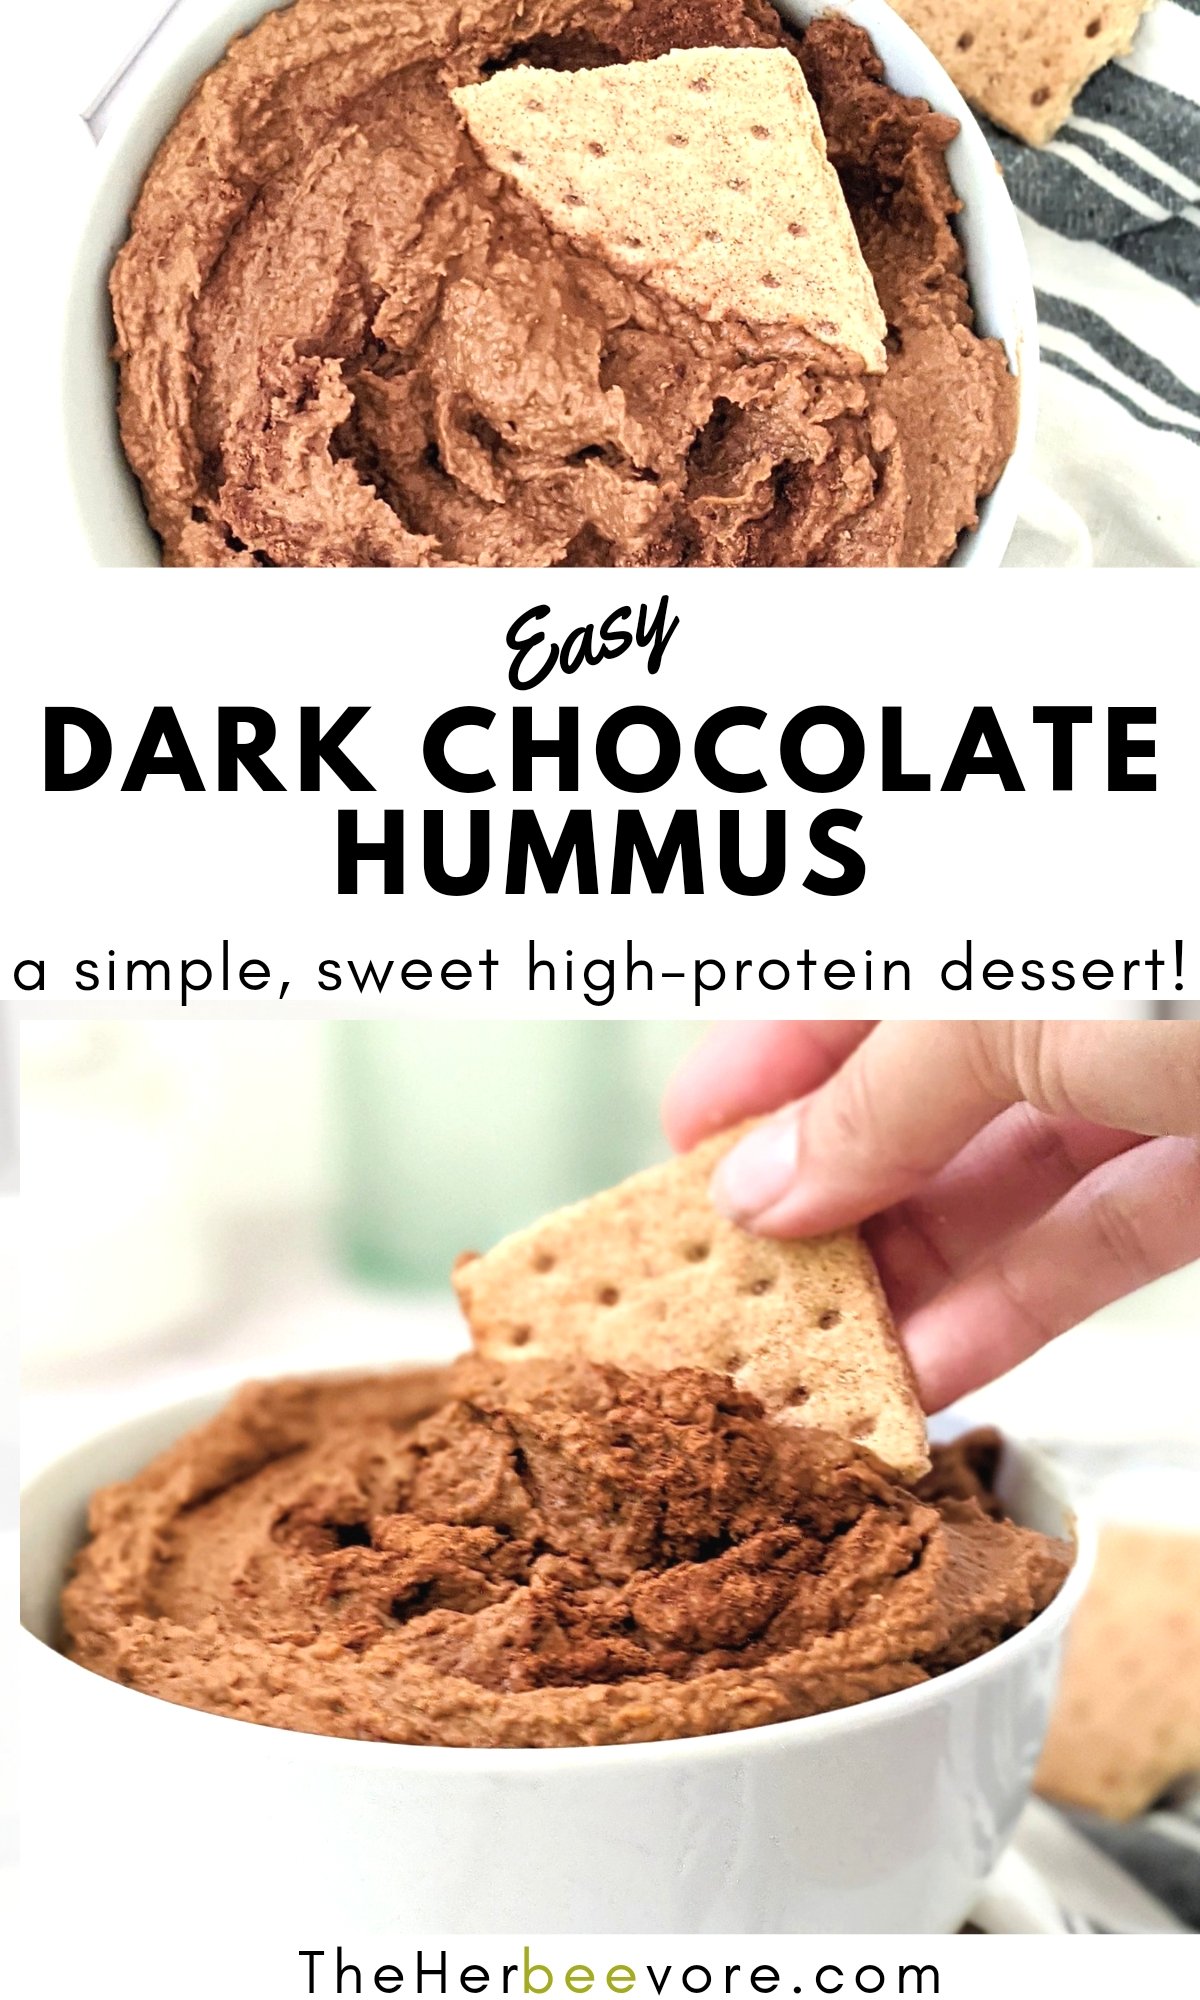 dark chocolate hummus recipe healthy high protein vegan chocolate dip with chickpeas and cookies dip of fruit recipe